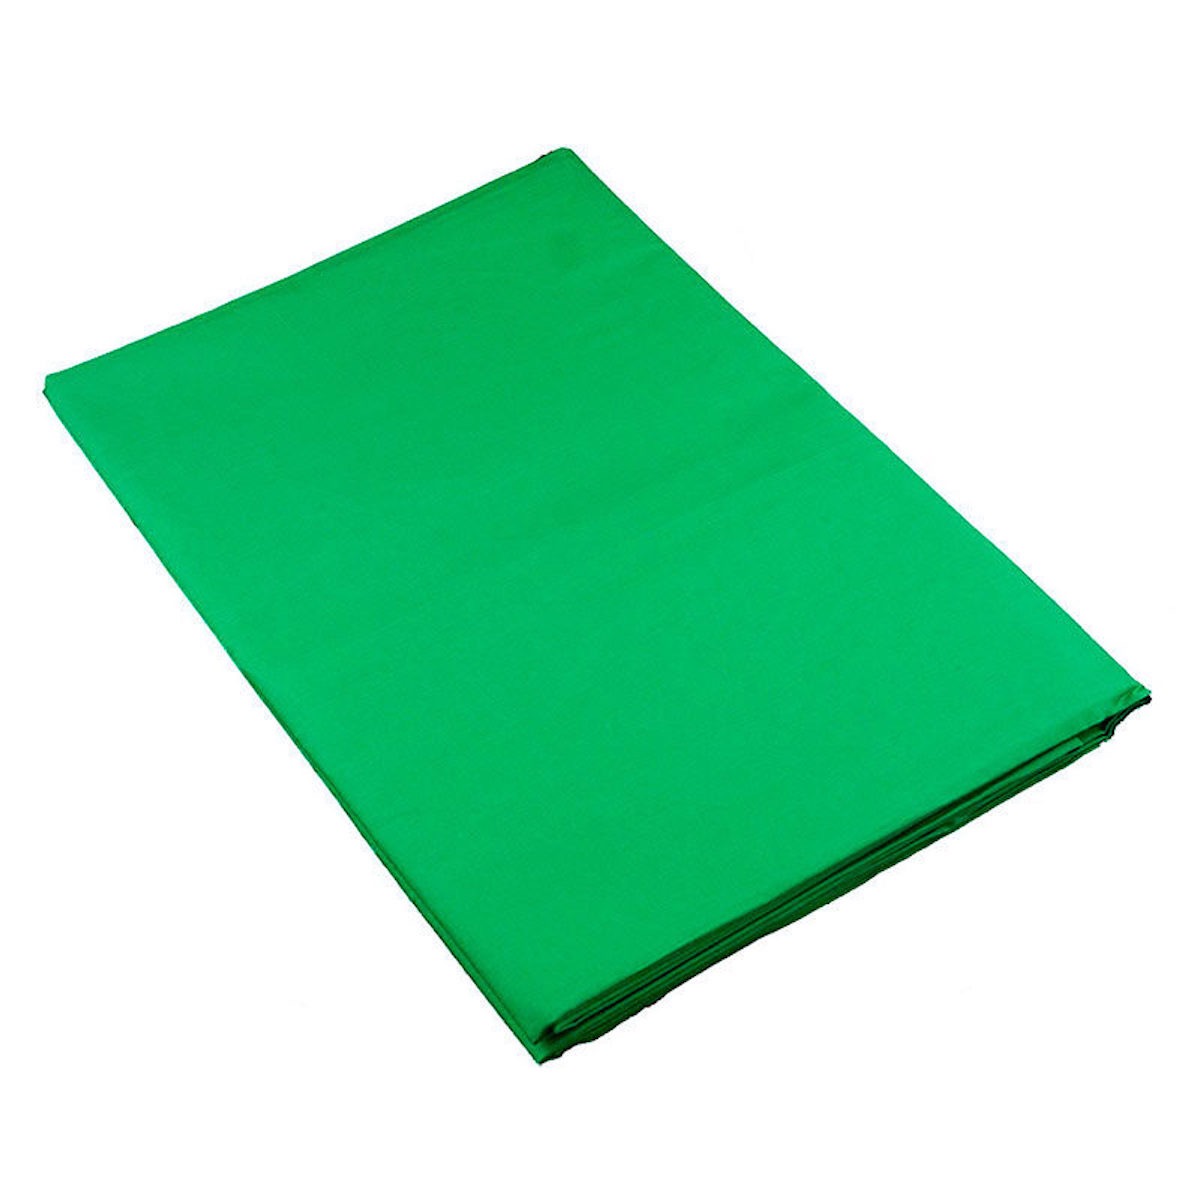 Caruba Greenscreen Hintergrundtuch 2 x 3m Grün